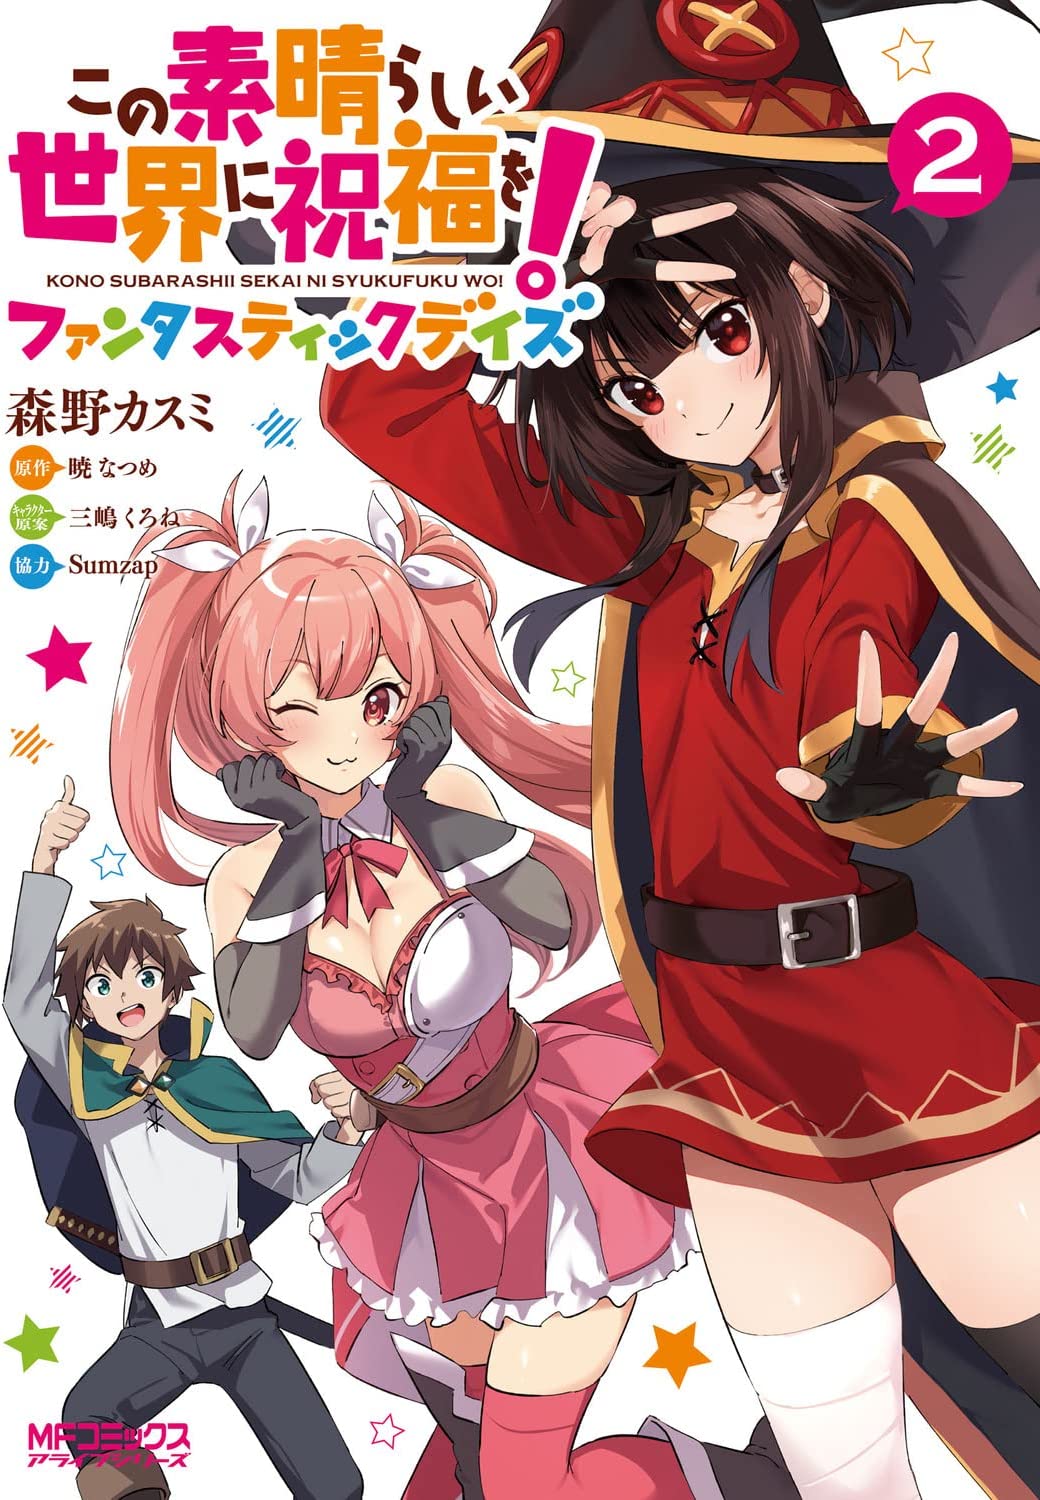 KonoSuba – God's blessing on this wonderful world! / Kono Subarashii Sekai  ni Shukufuku o! - Other Anime - AN Forums